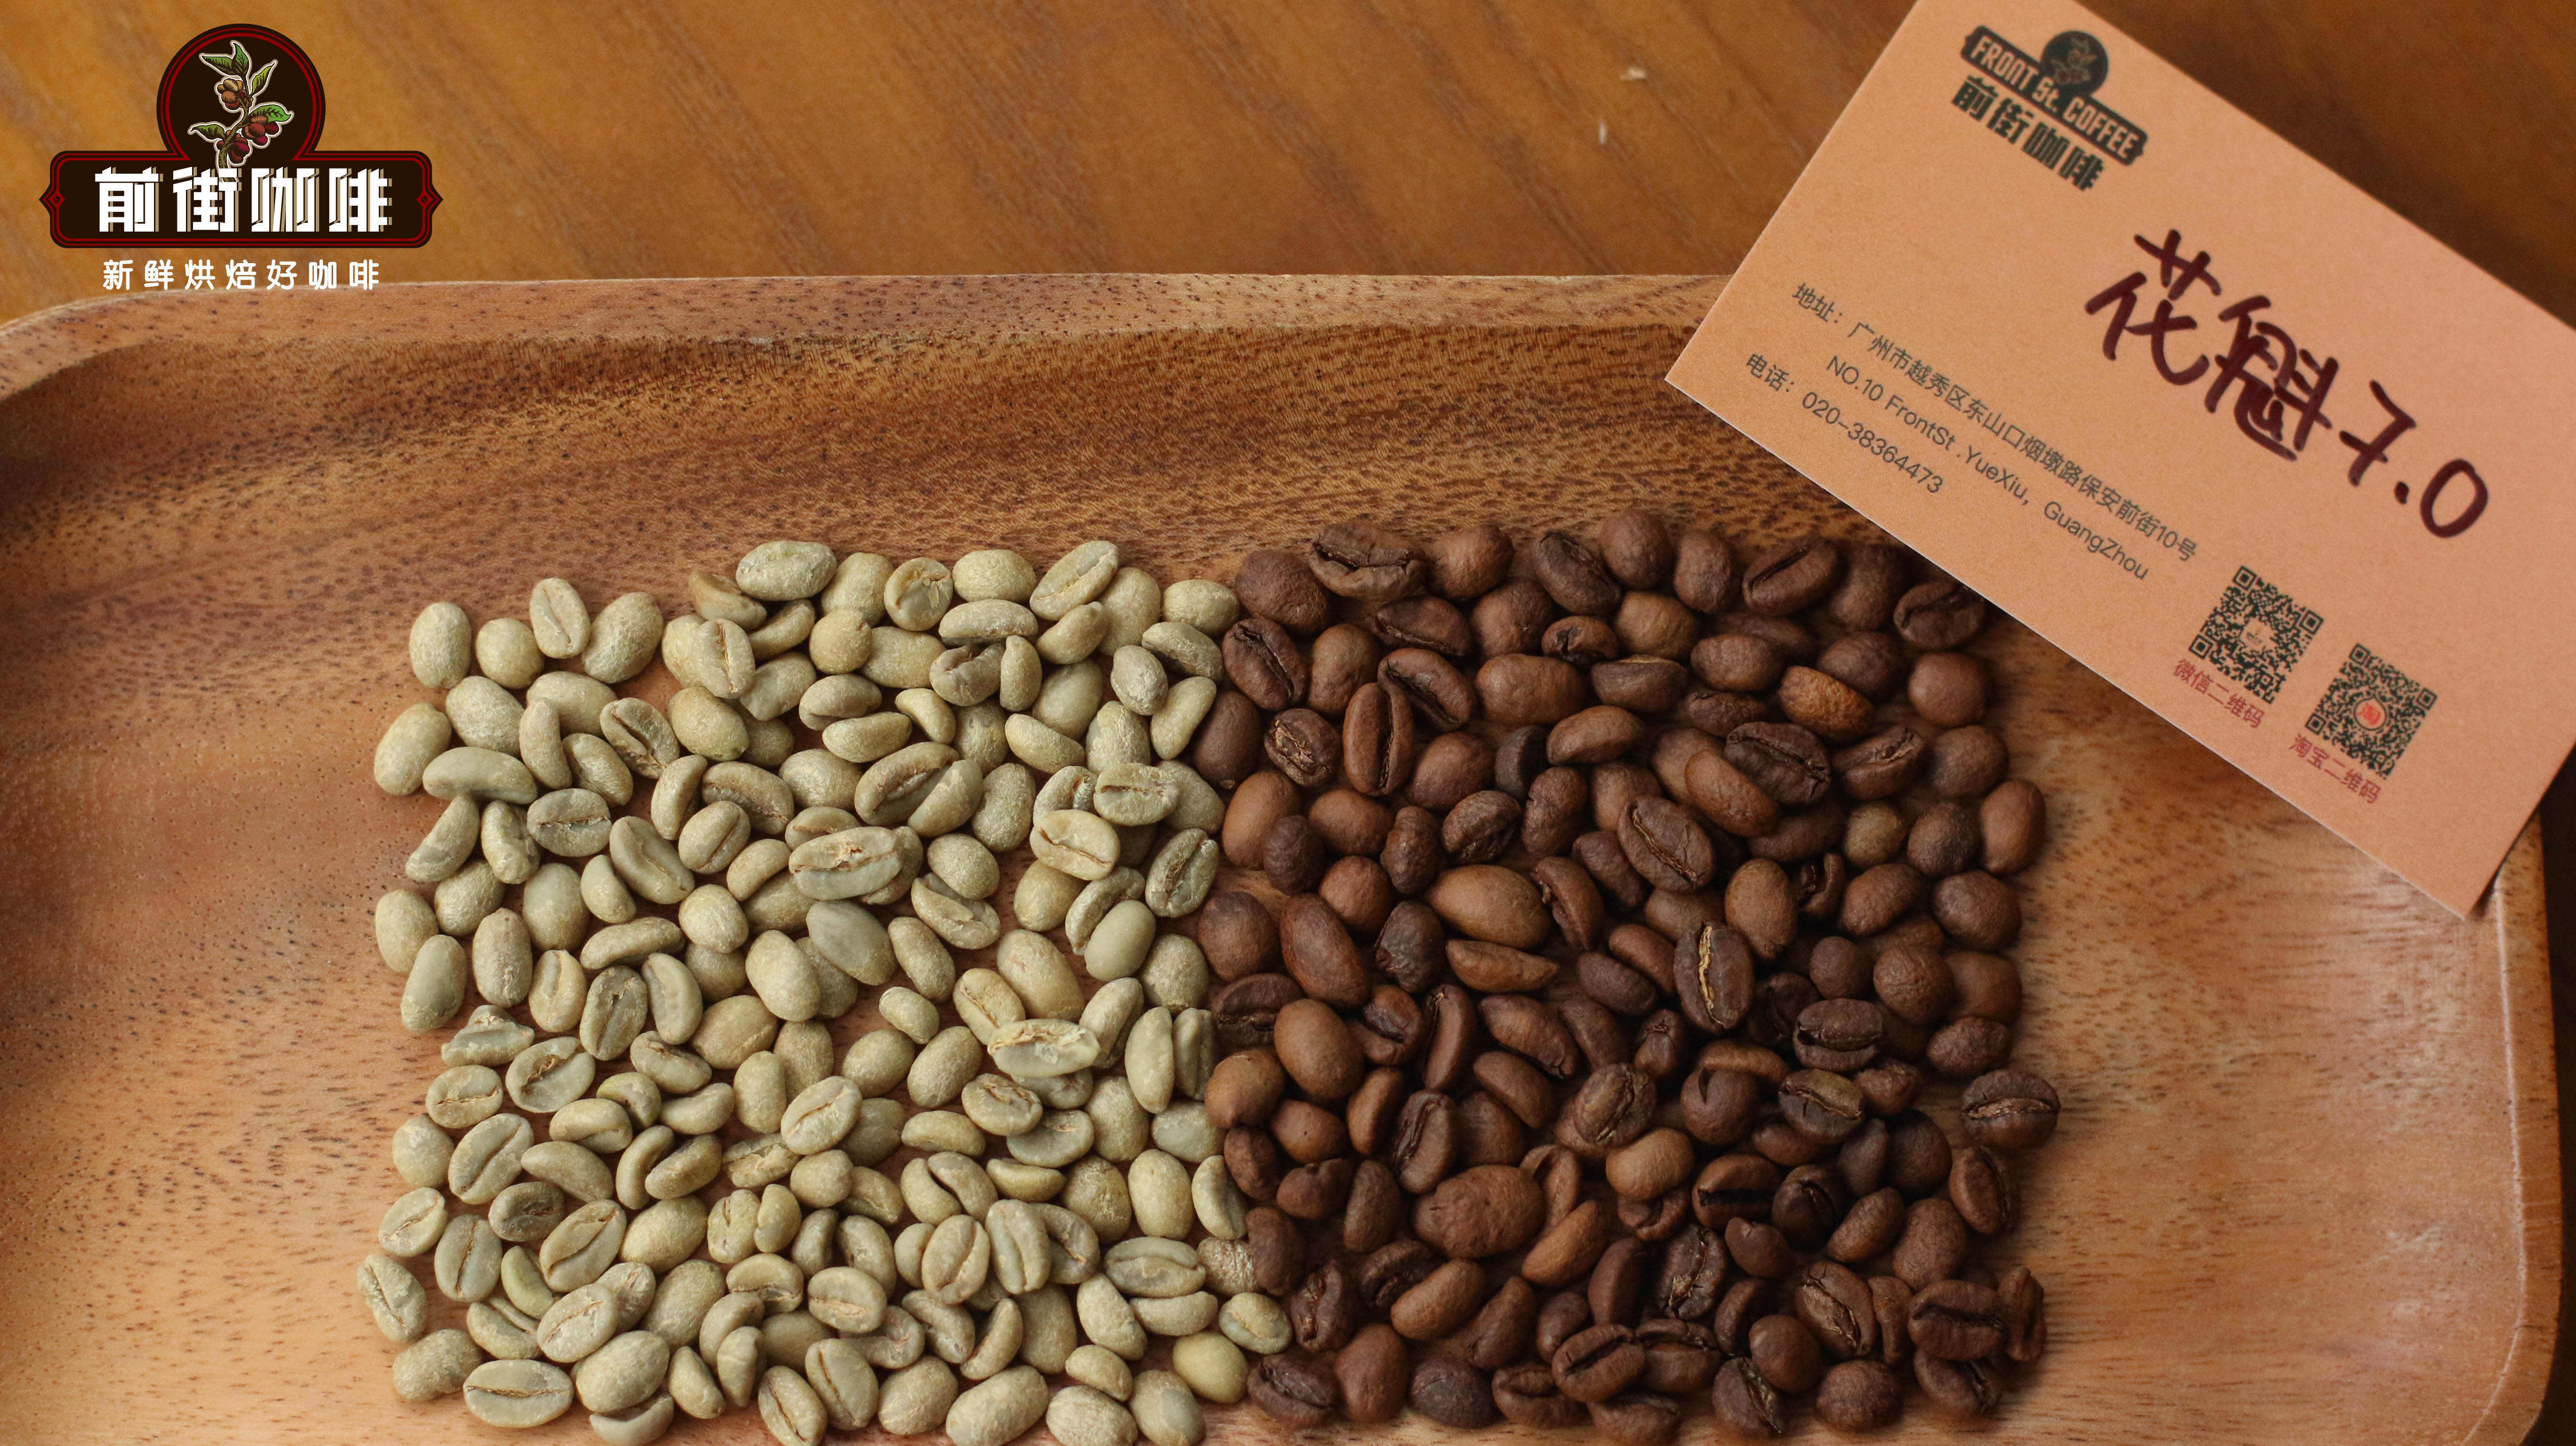 Introduction to the flavor and taste of Xidama Sun Huakui 7.0 Coffee Bean Humbela Sakui Coffee in the new season